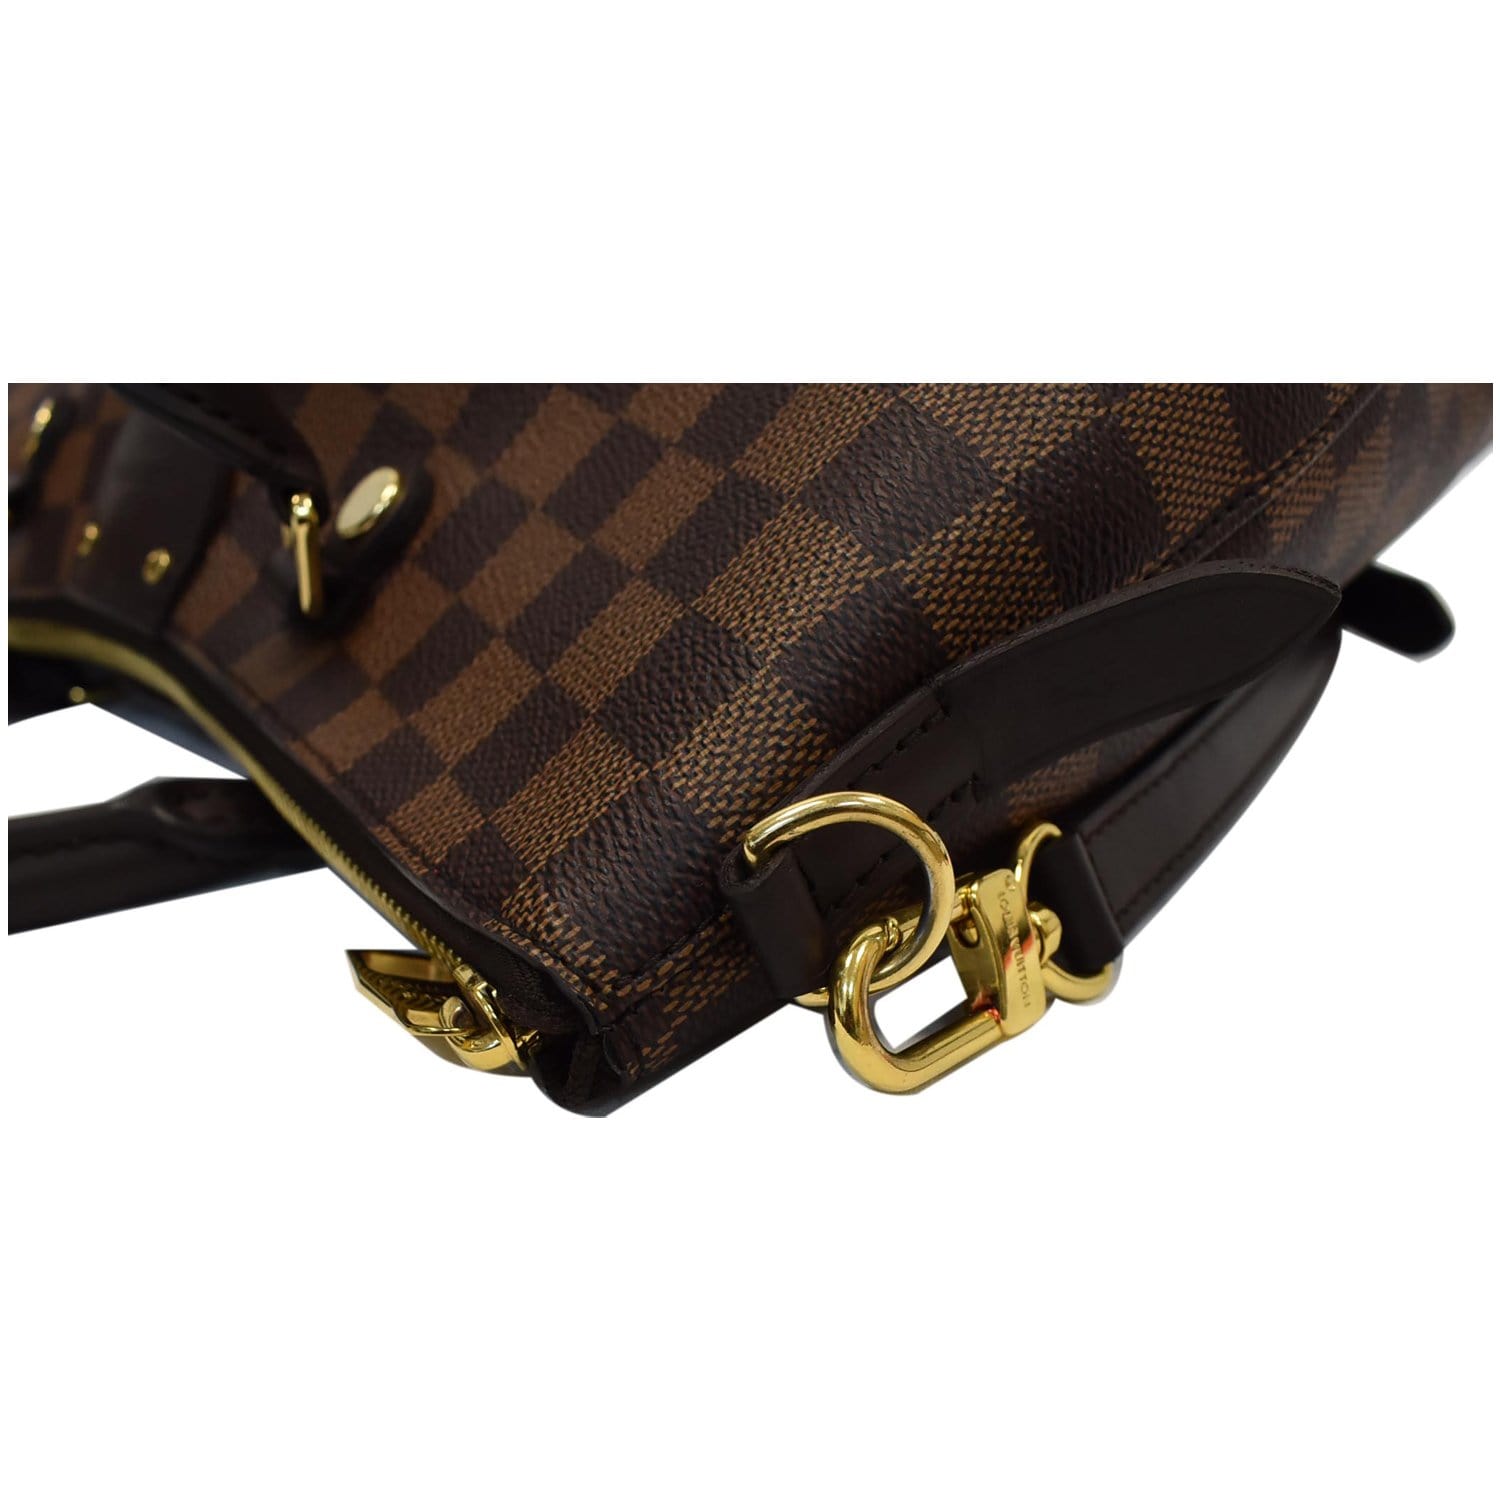 Louis Vuitton Siena PM - Most underrated LV bag! 